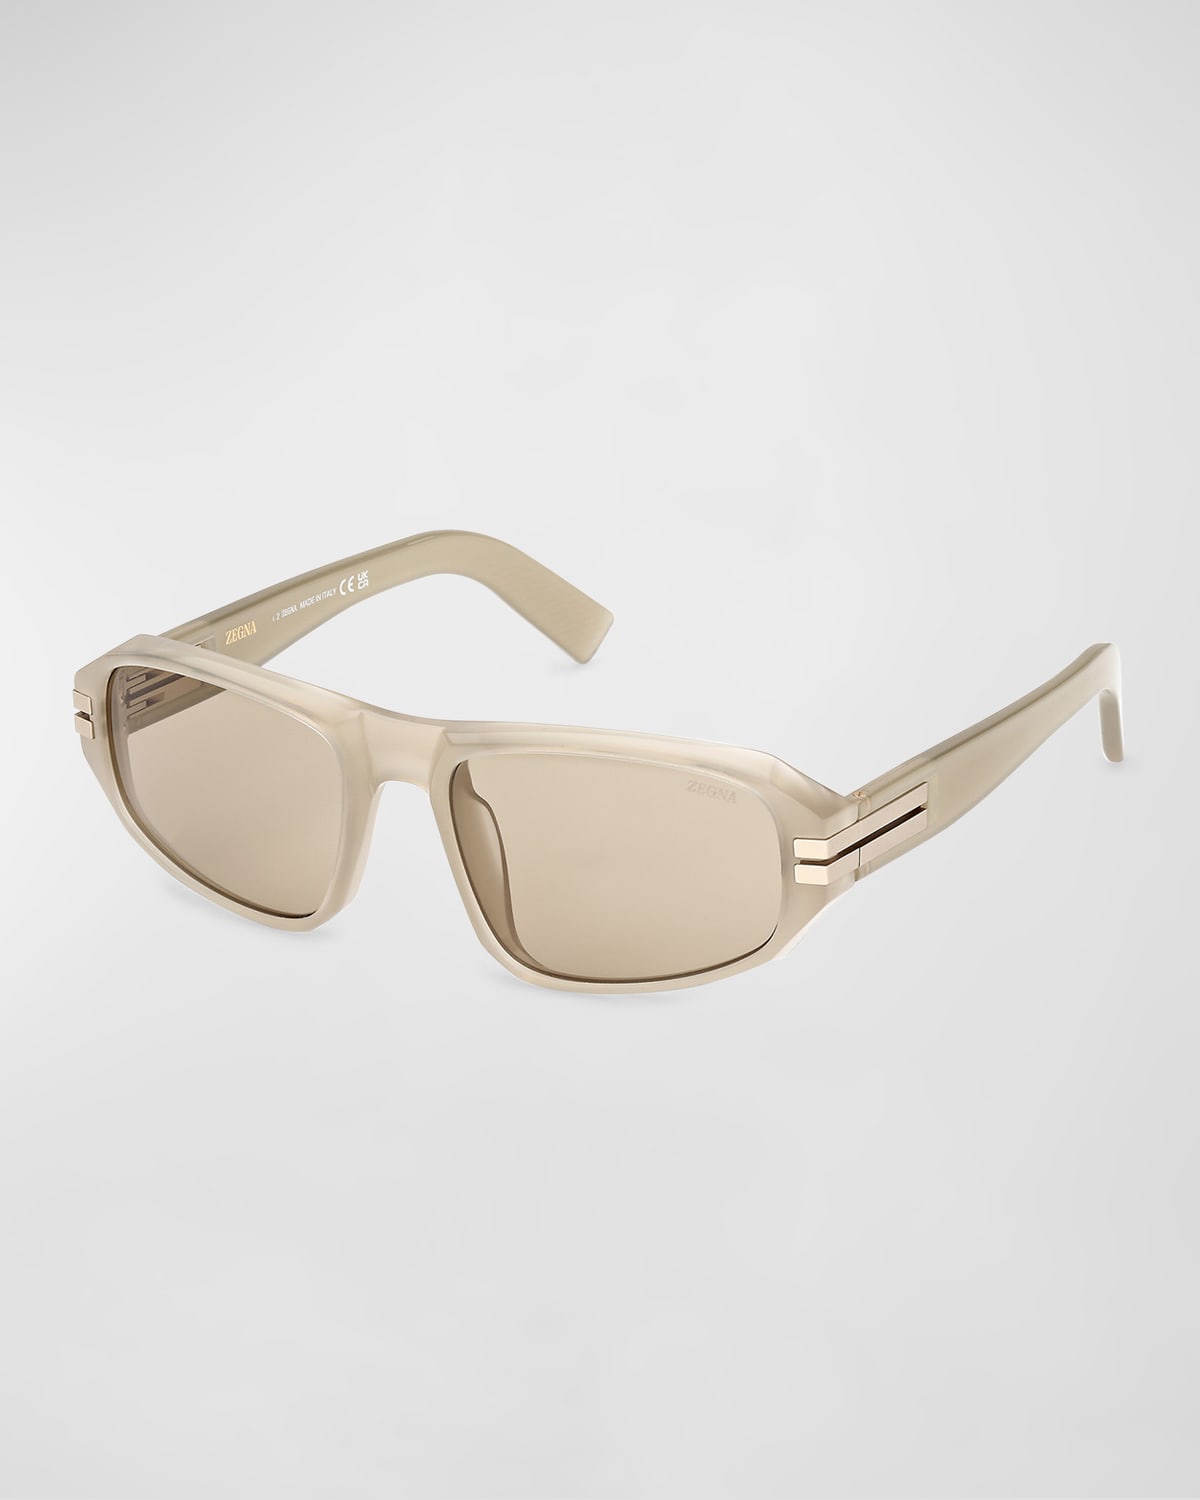 Men's Polarized Acetate Square Sunglasses